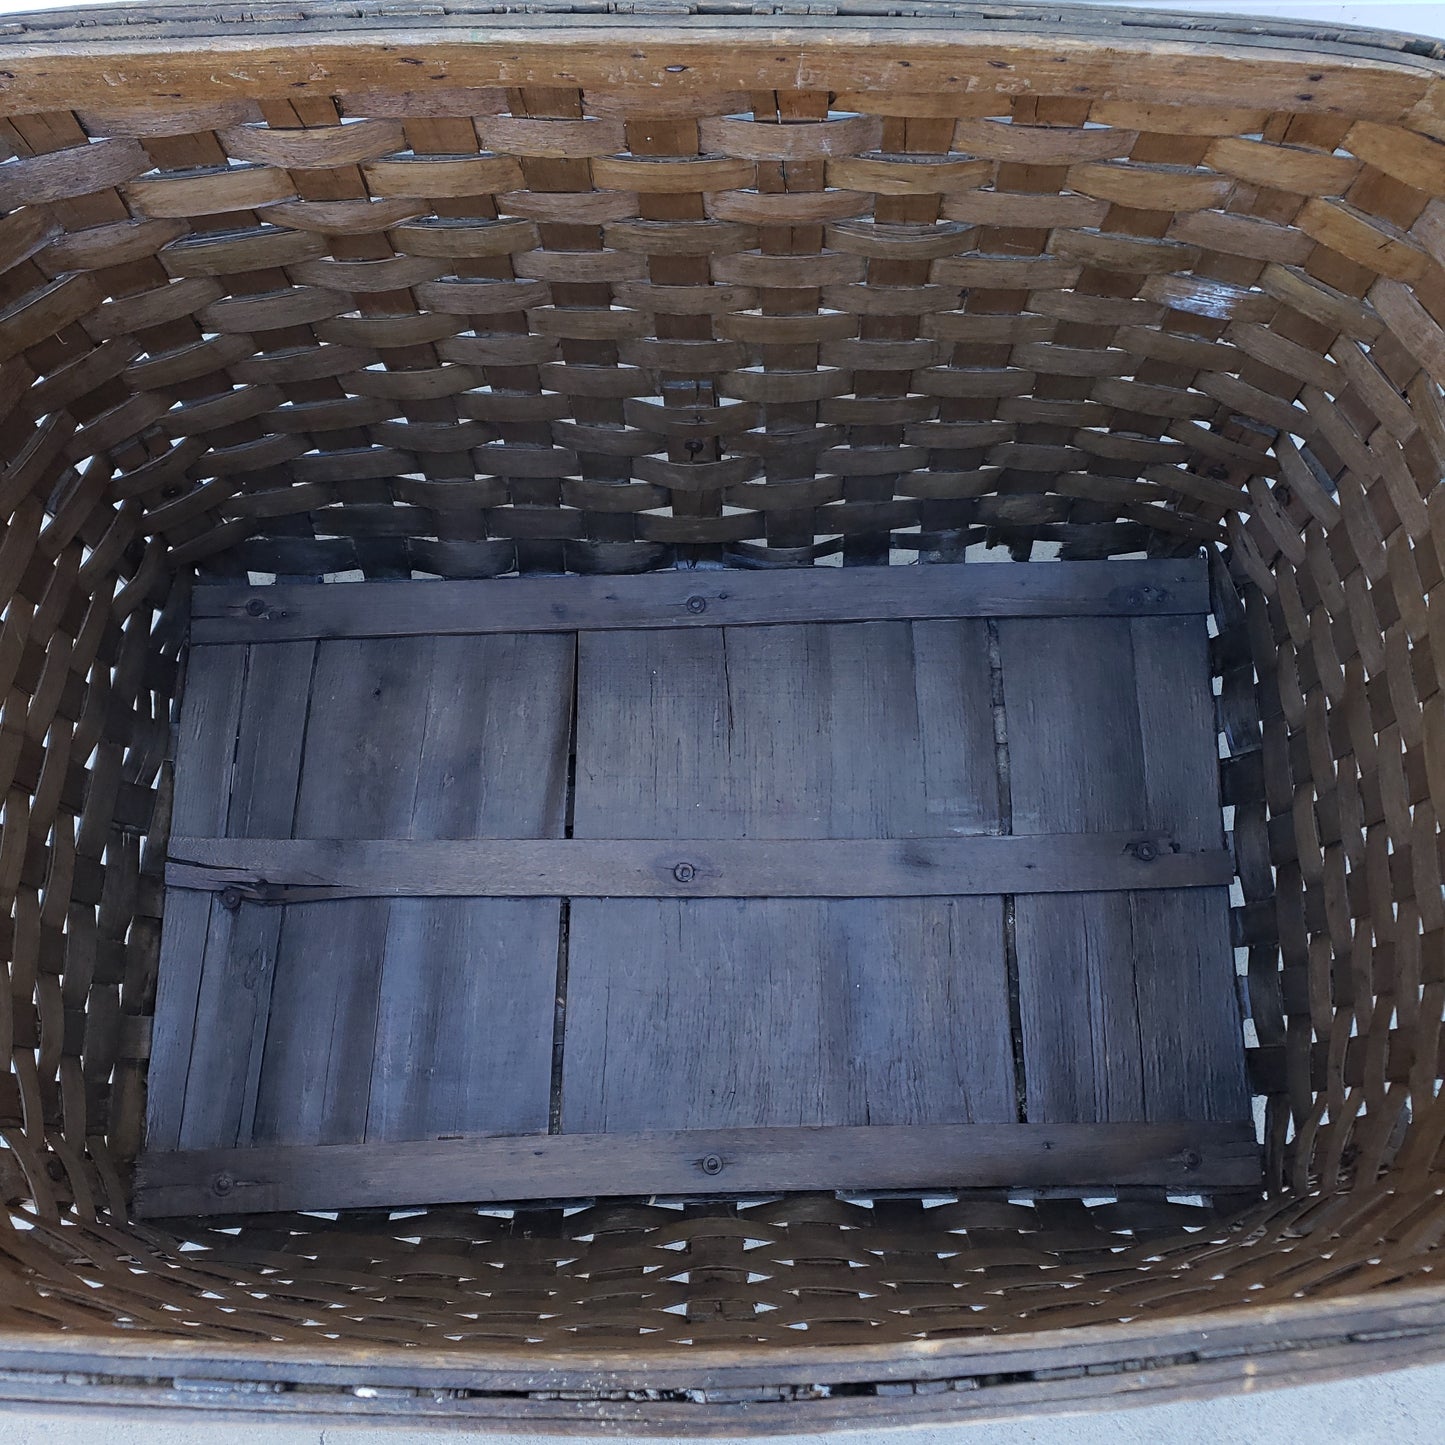 XL Dark Woven Basket - “Wausau Laundry Co.”